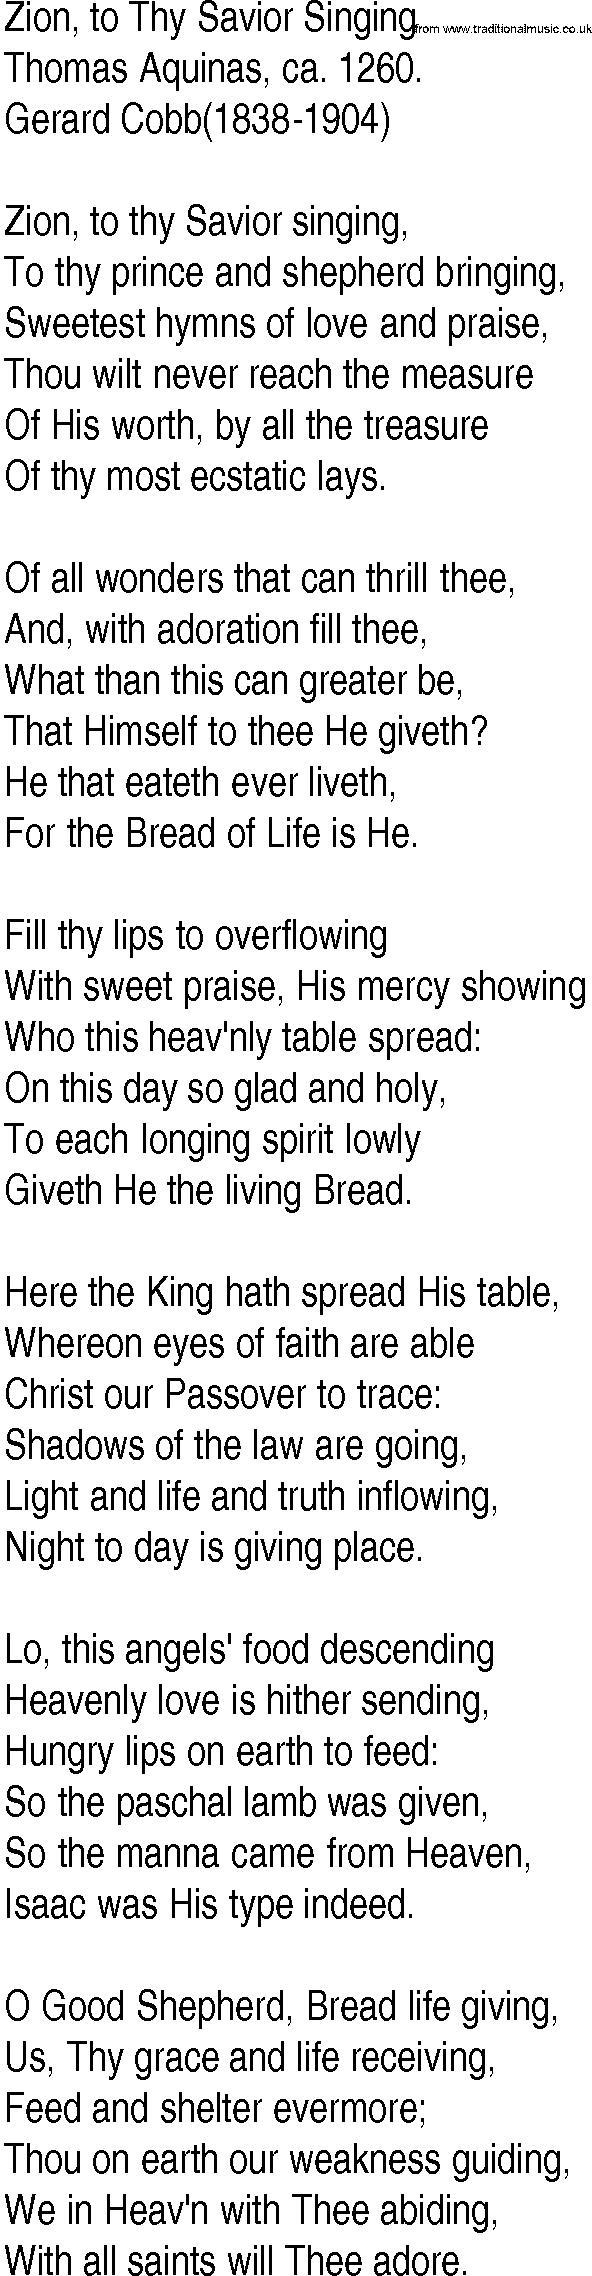 Hymn and Gospel Song: Zion, to Thy Savior Singing by Thomas Aquinas ca lyrics